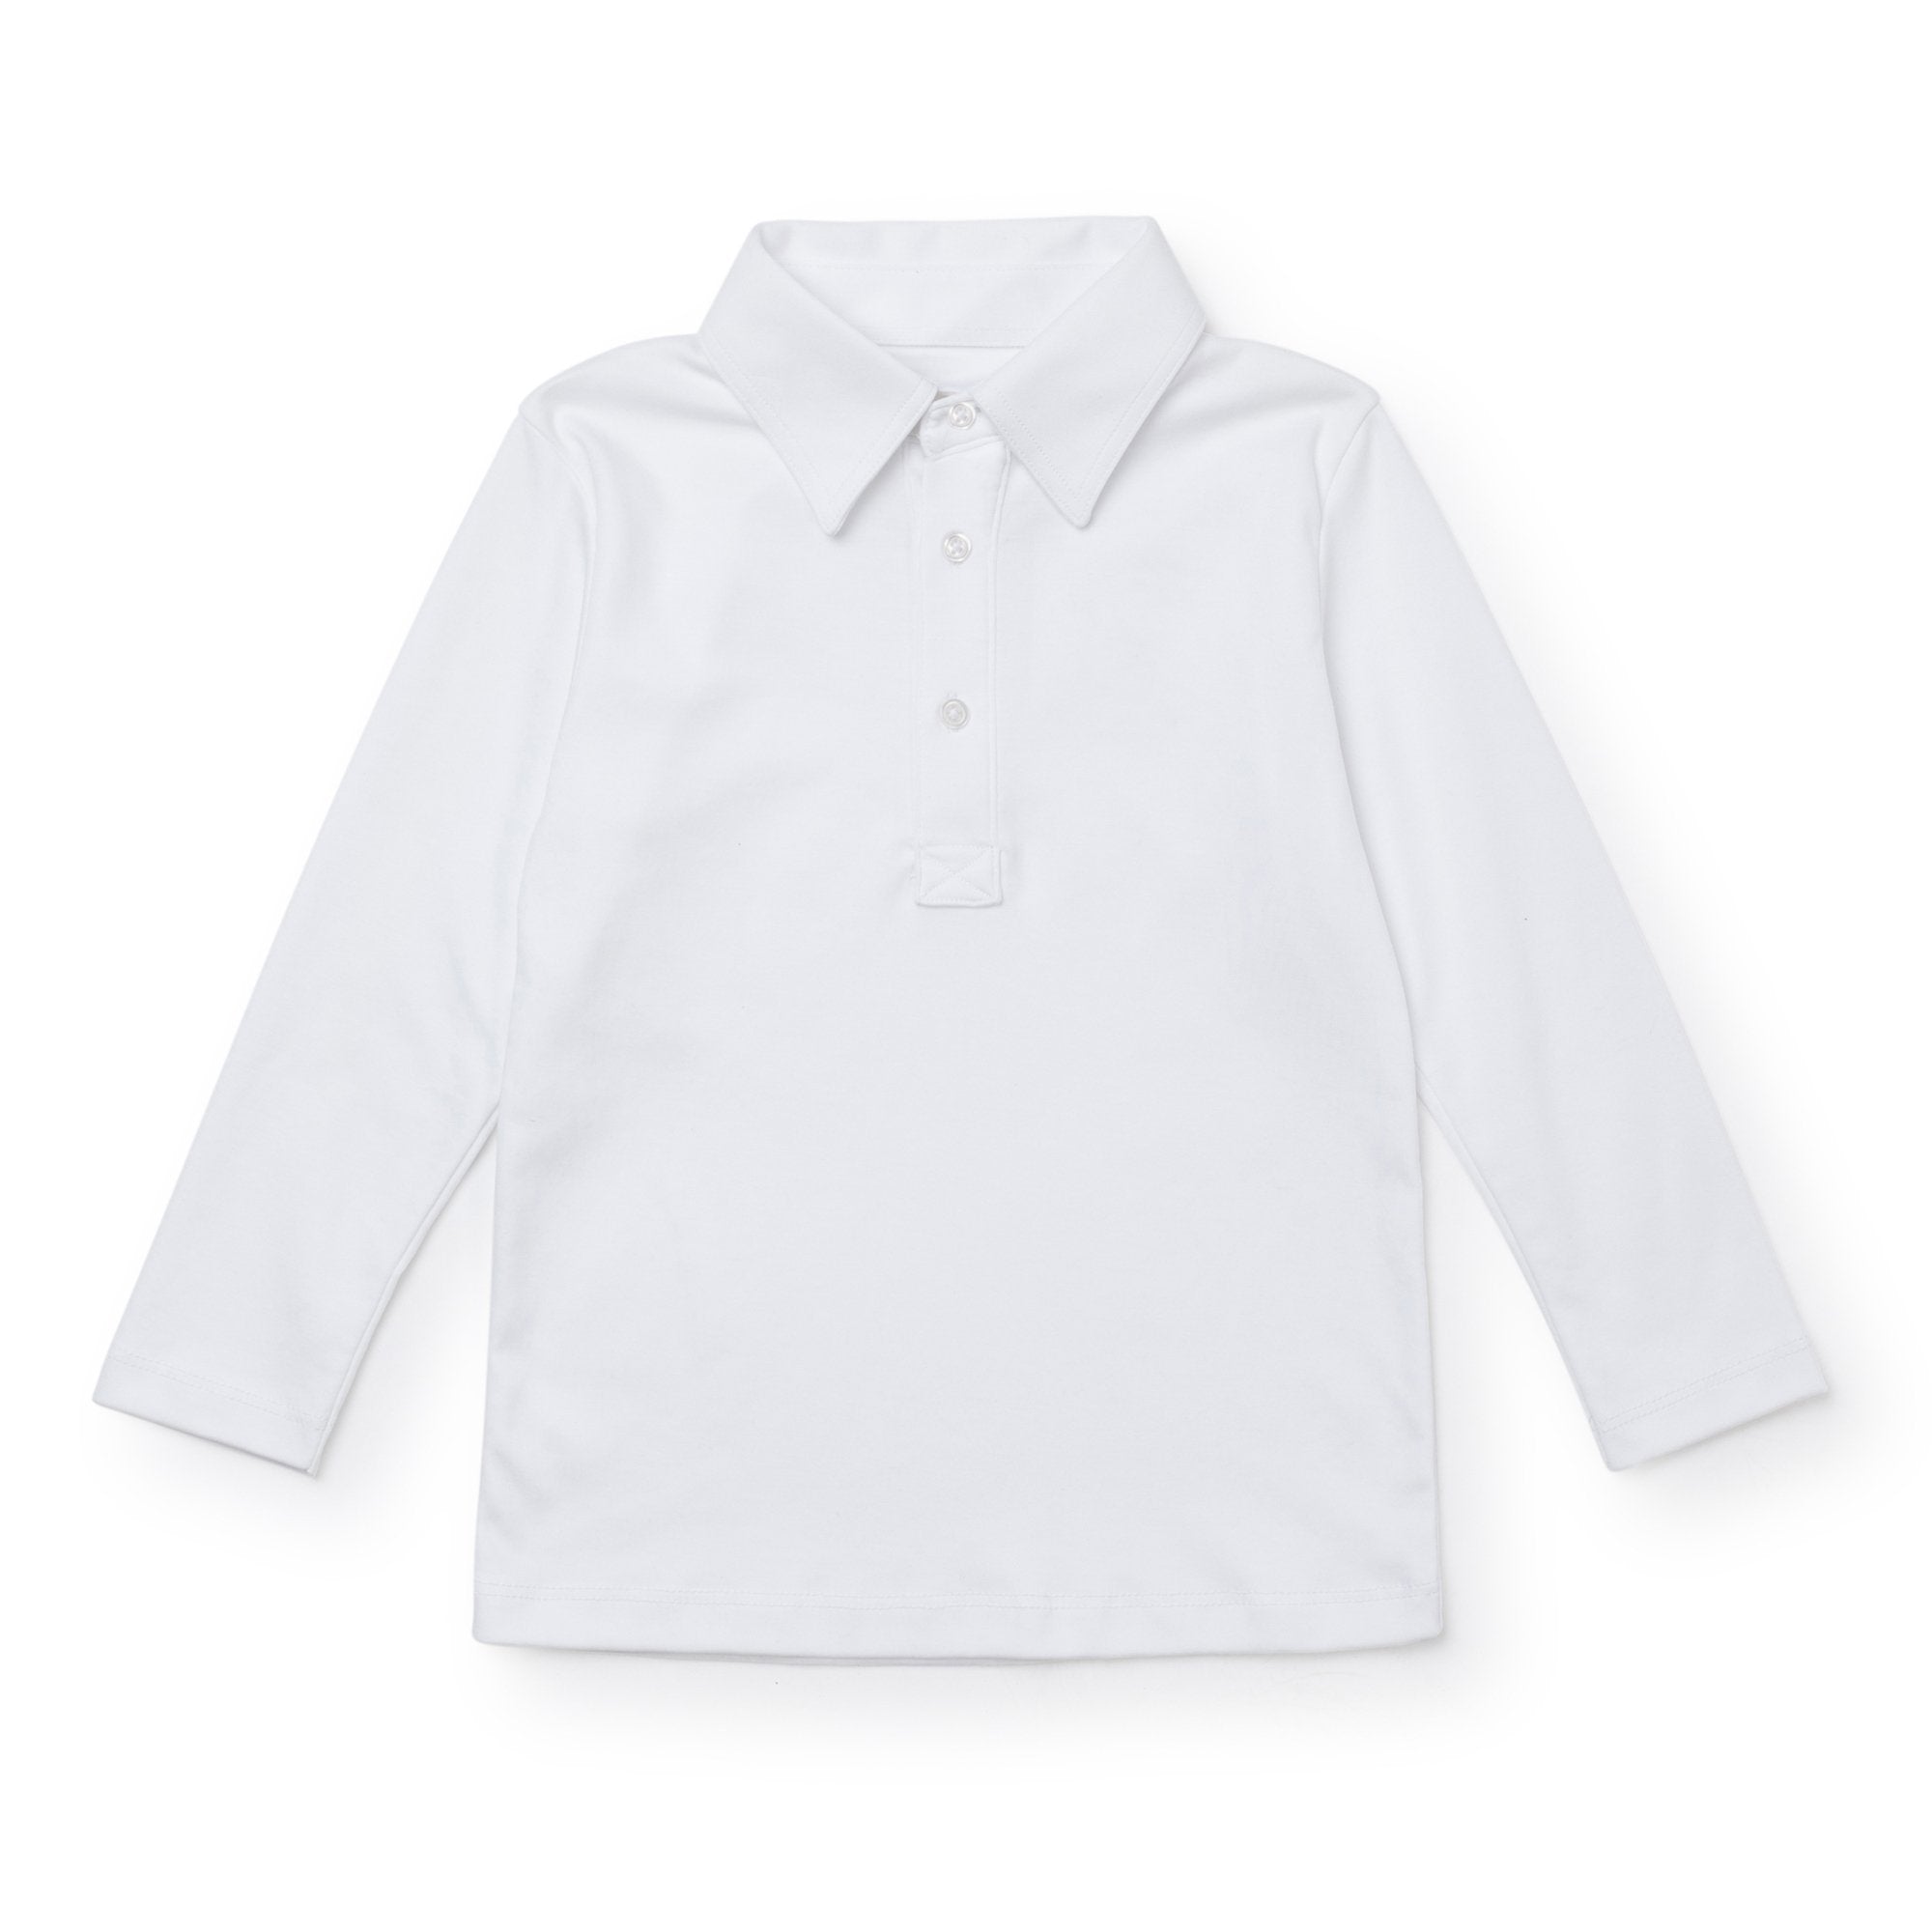 Finn Pima Cotton Long Sleeve Polo for Boys - White - HoneyBug 